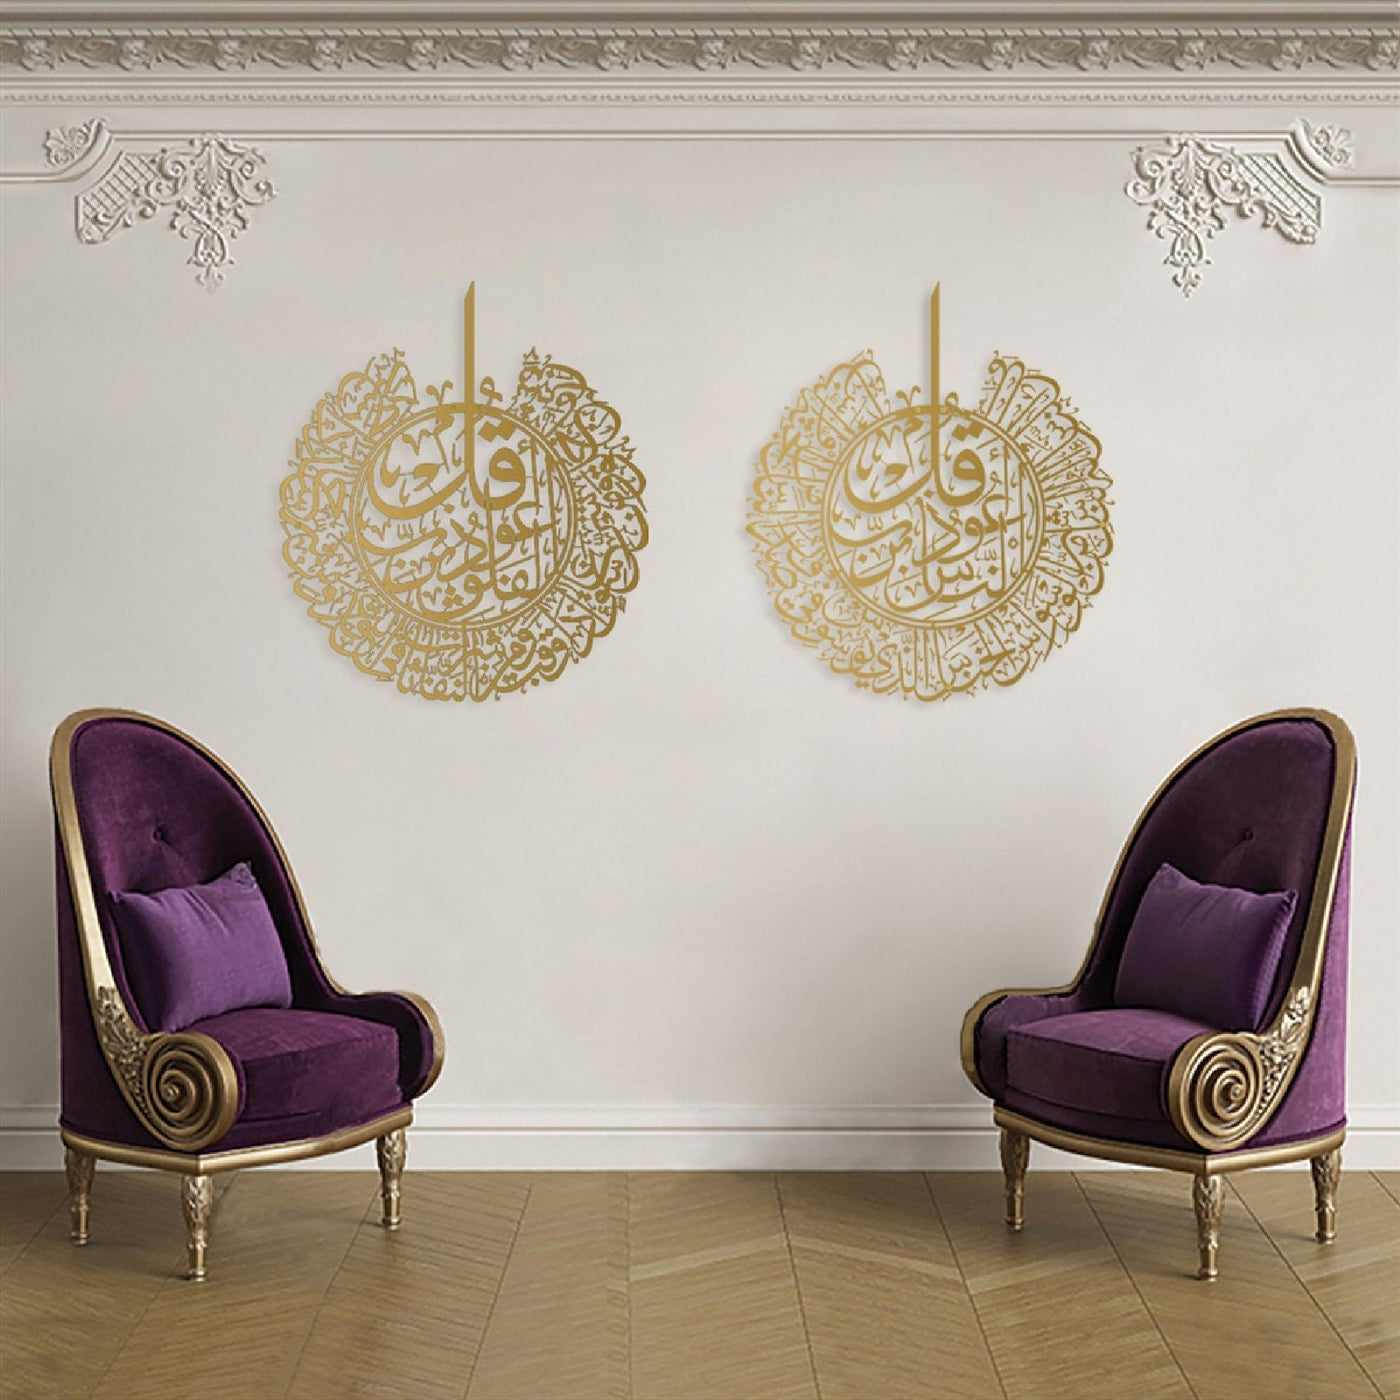 Surah Al-Nas Islamic Wall Art Shiny Gold Metal